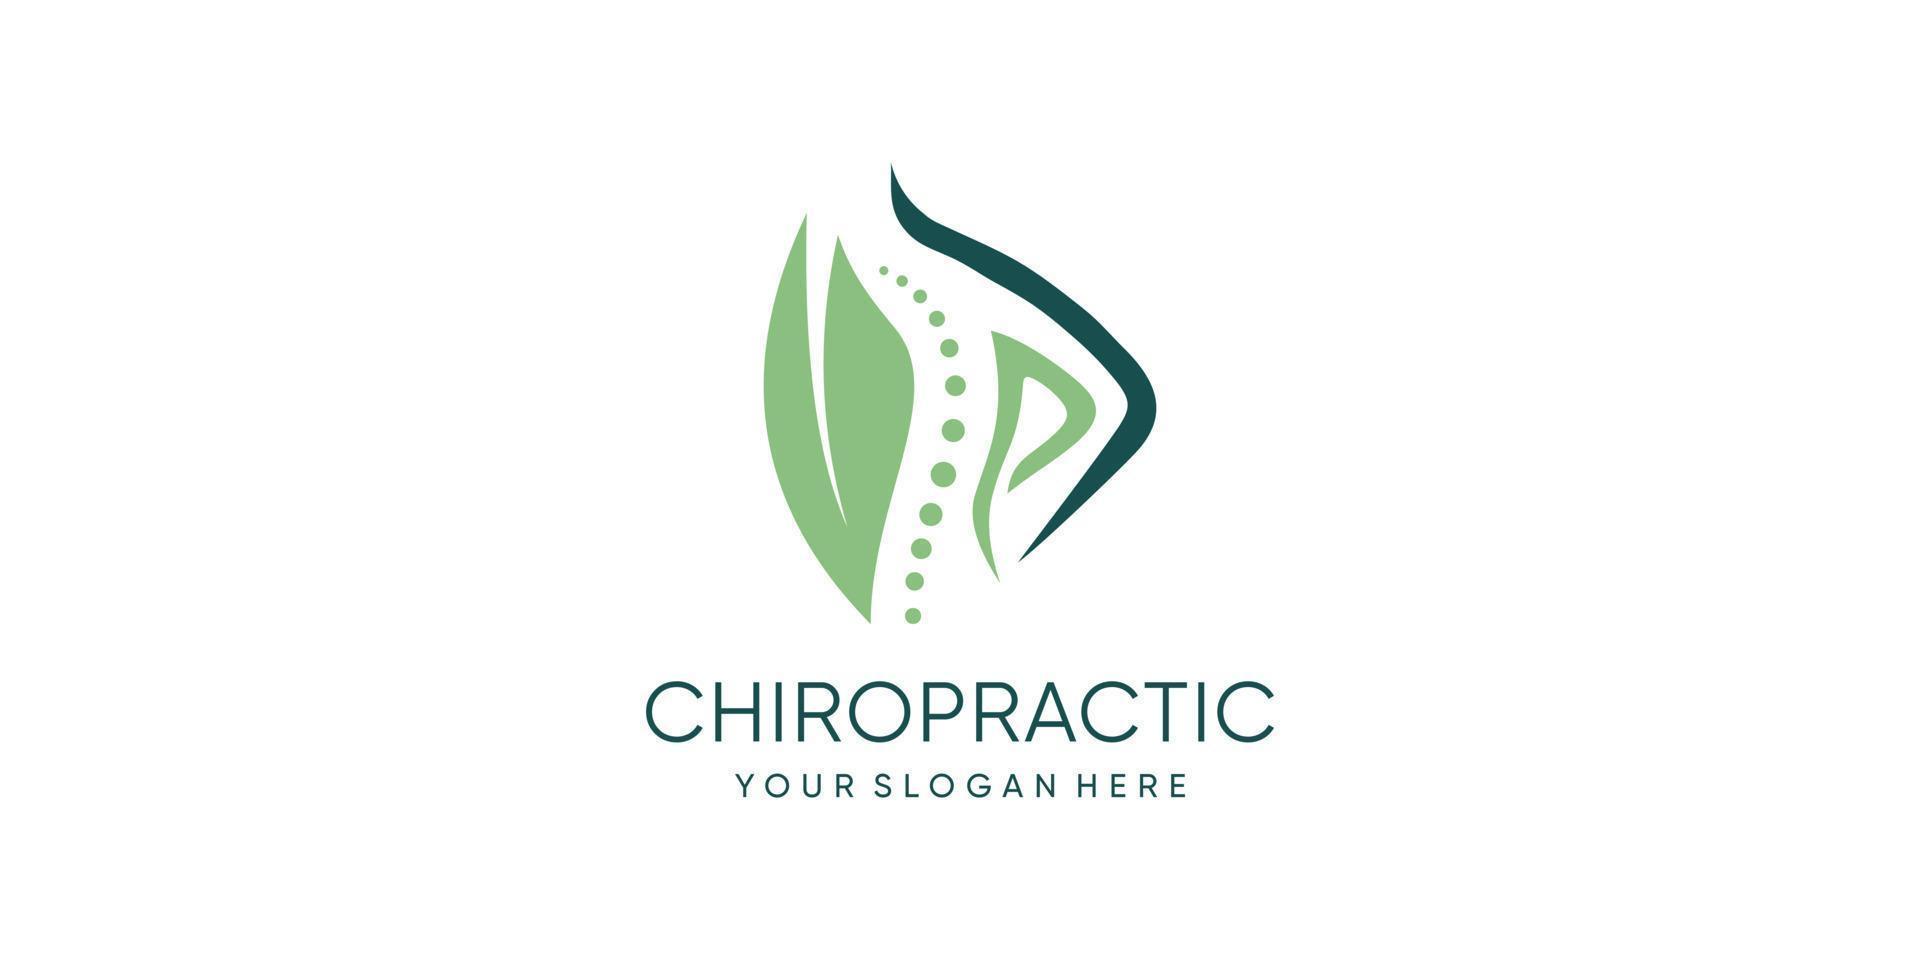 Chiropractic vector icon logo design with unique and creative style Premium Vector